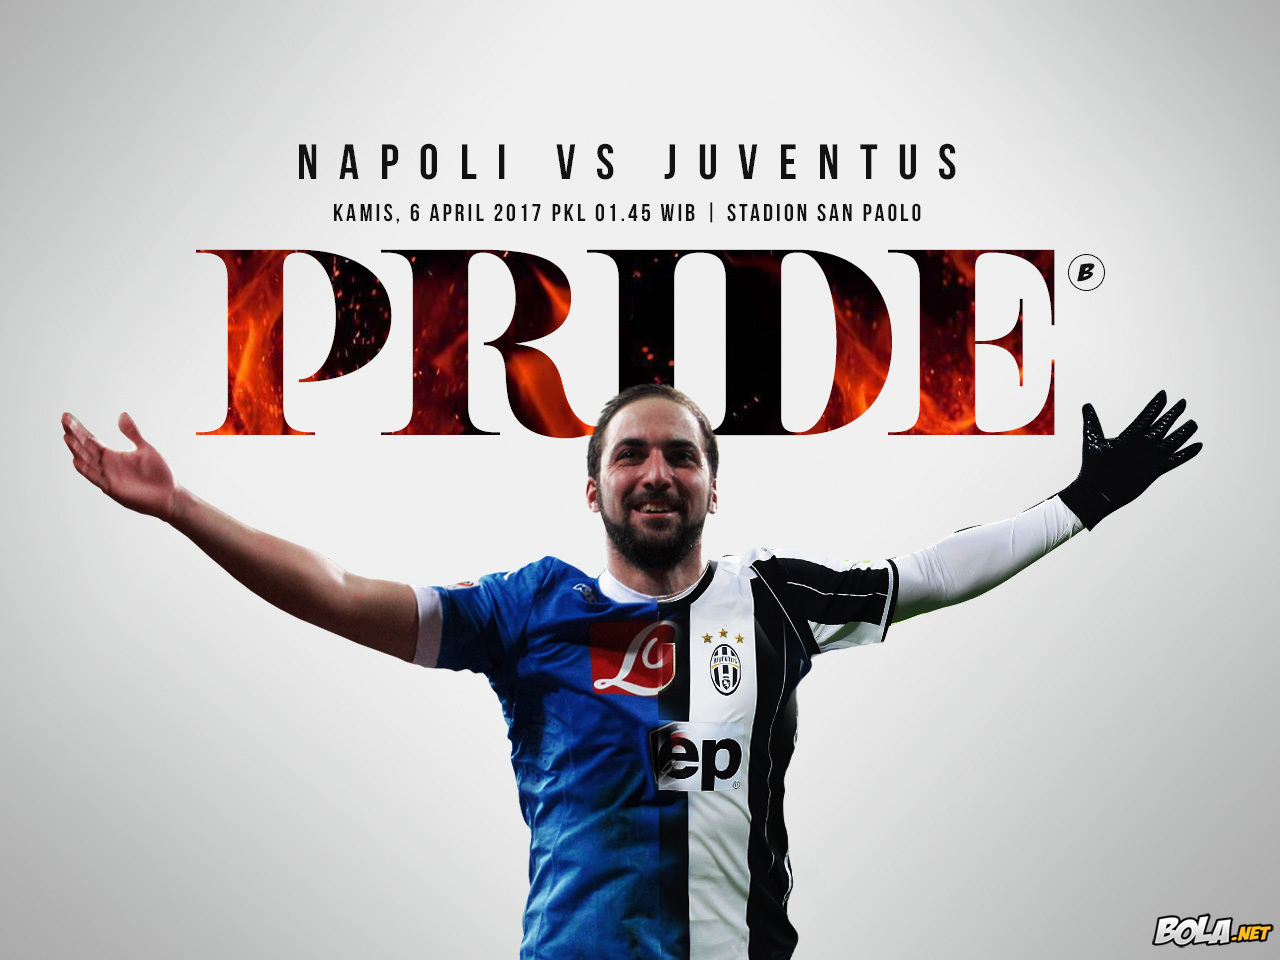 Deskripsi : Wallpaper Napoli Vs Juventus, size: 1280x960